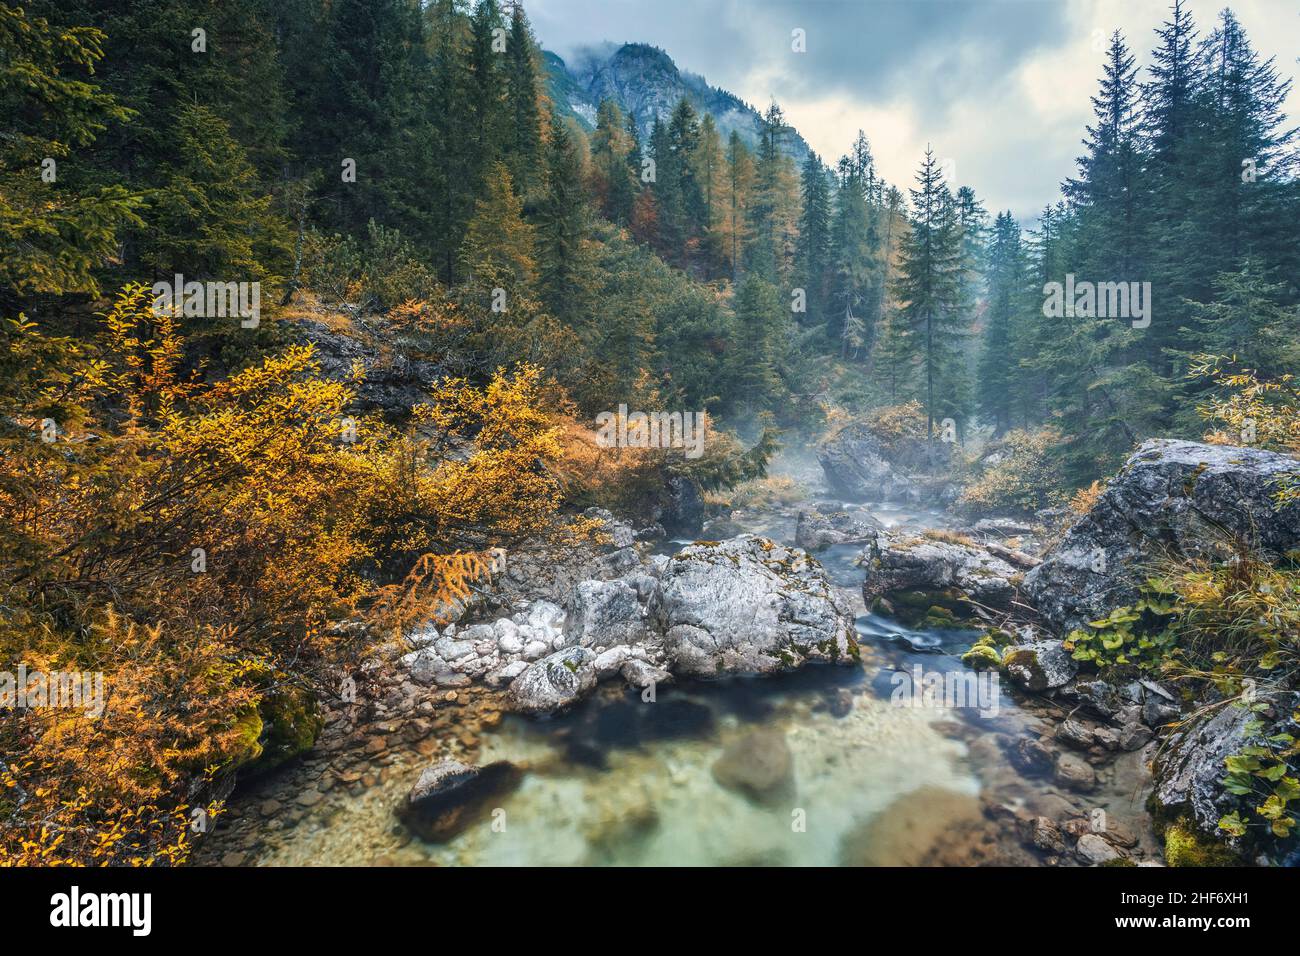 The waters of the Mae torrent in Val di Zoldo,  autumn forest,  Pecol di Zoldo,  Province of Belluno,  Veneto,  Italy Stock Photo